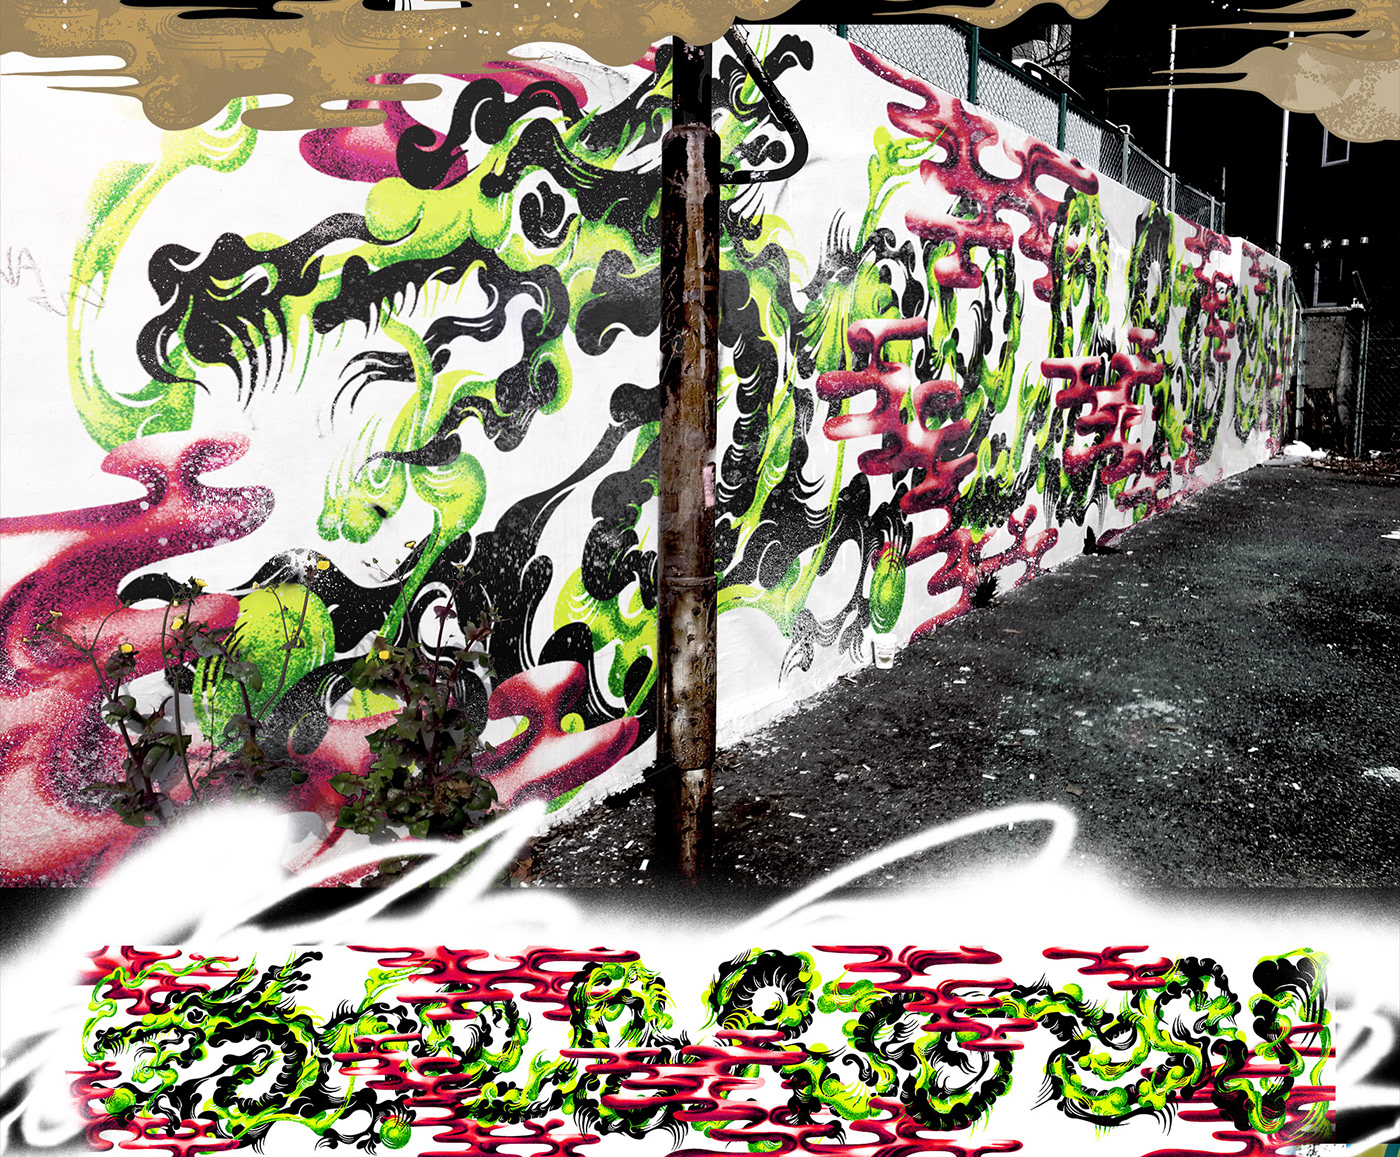 SHIBUYA GRAFFITI on Behance